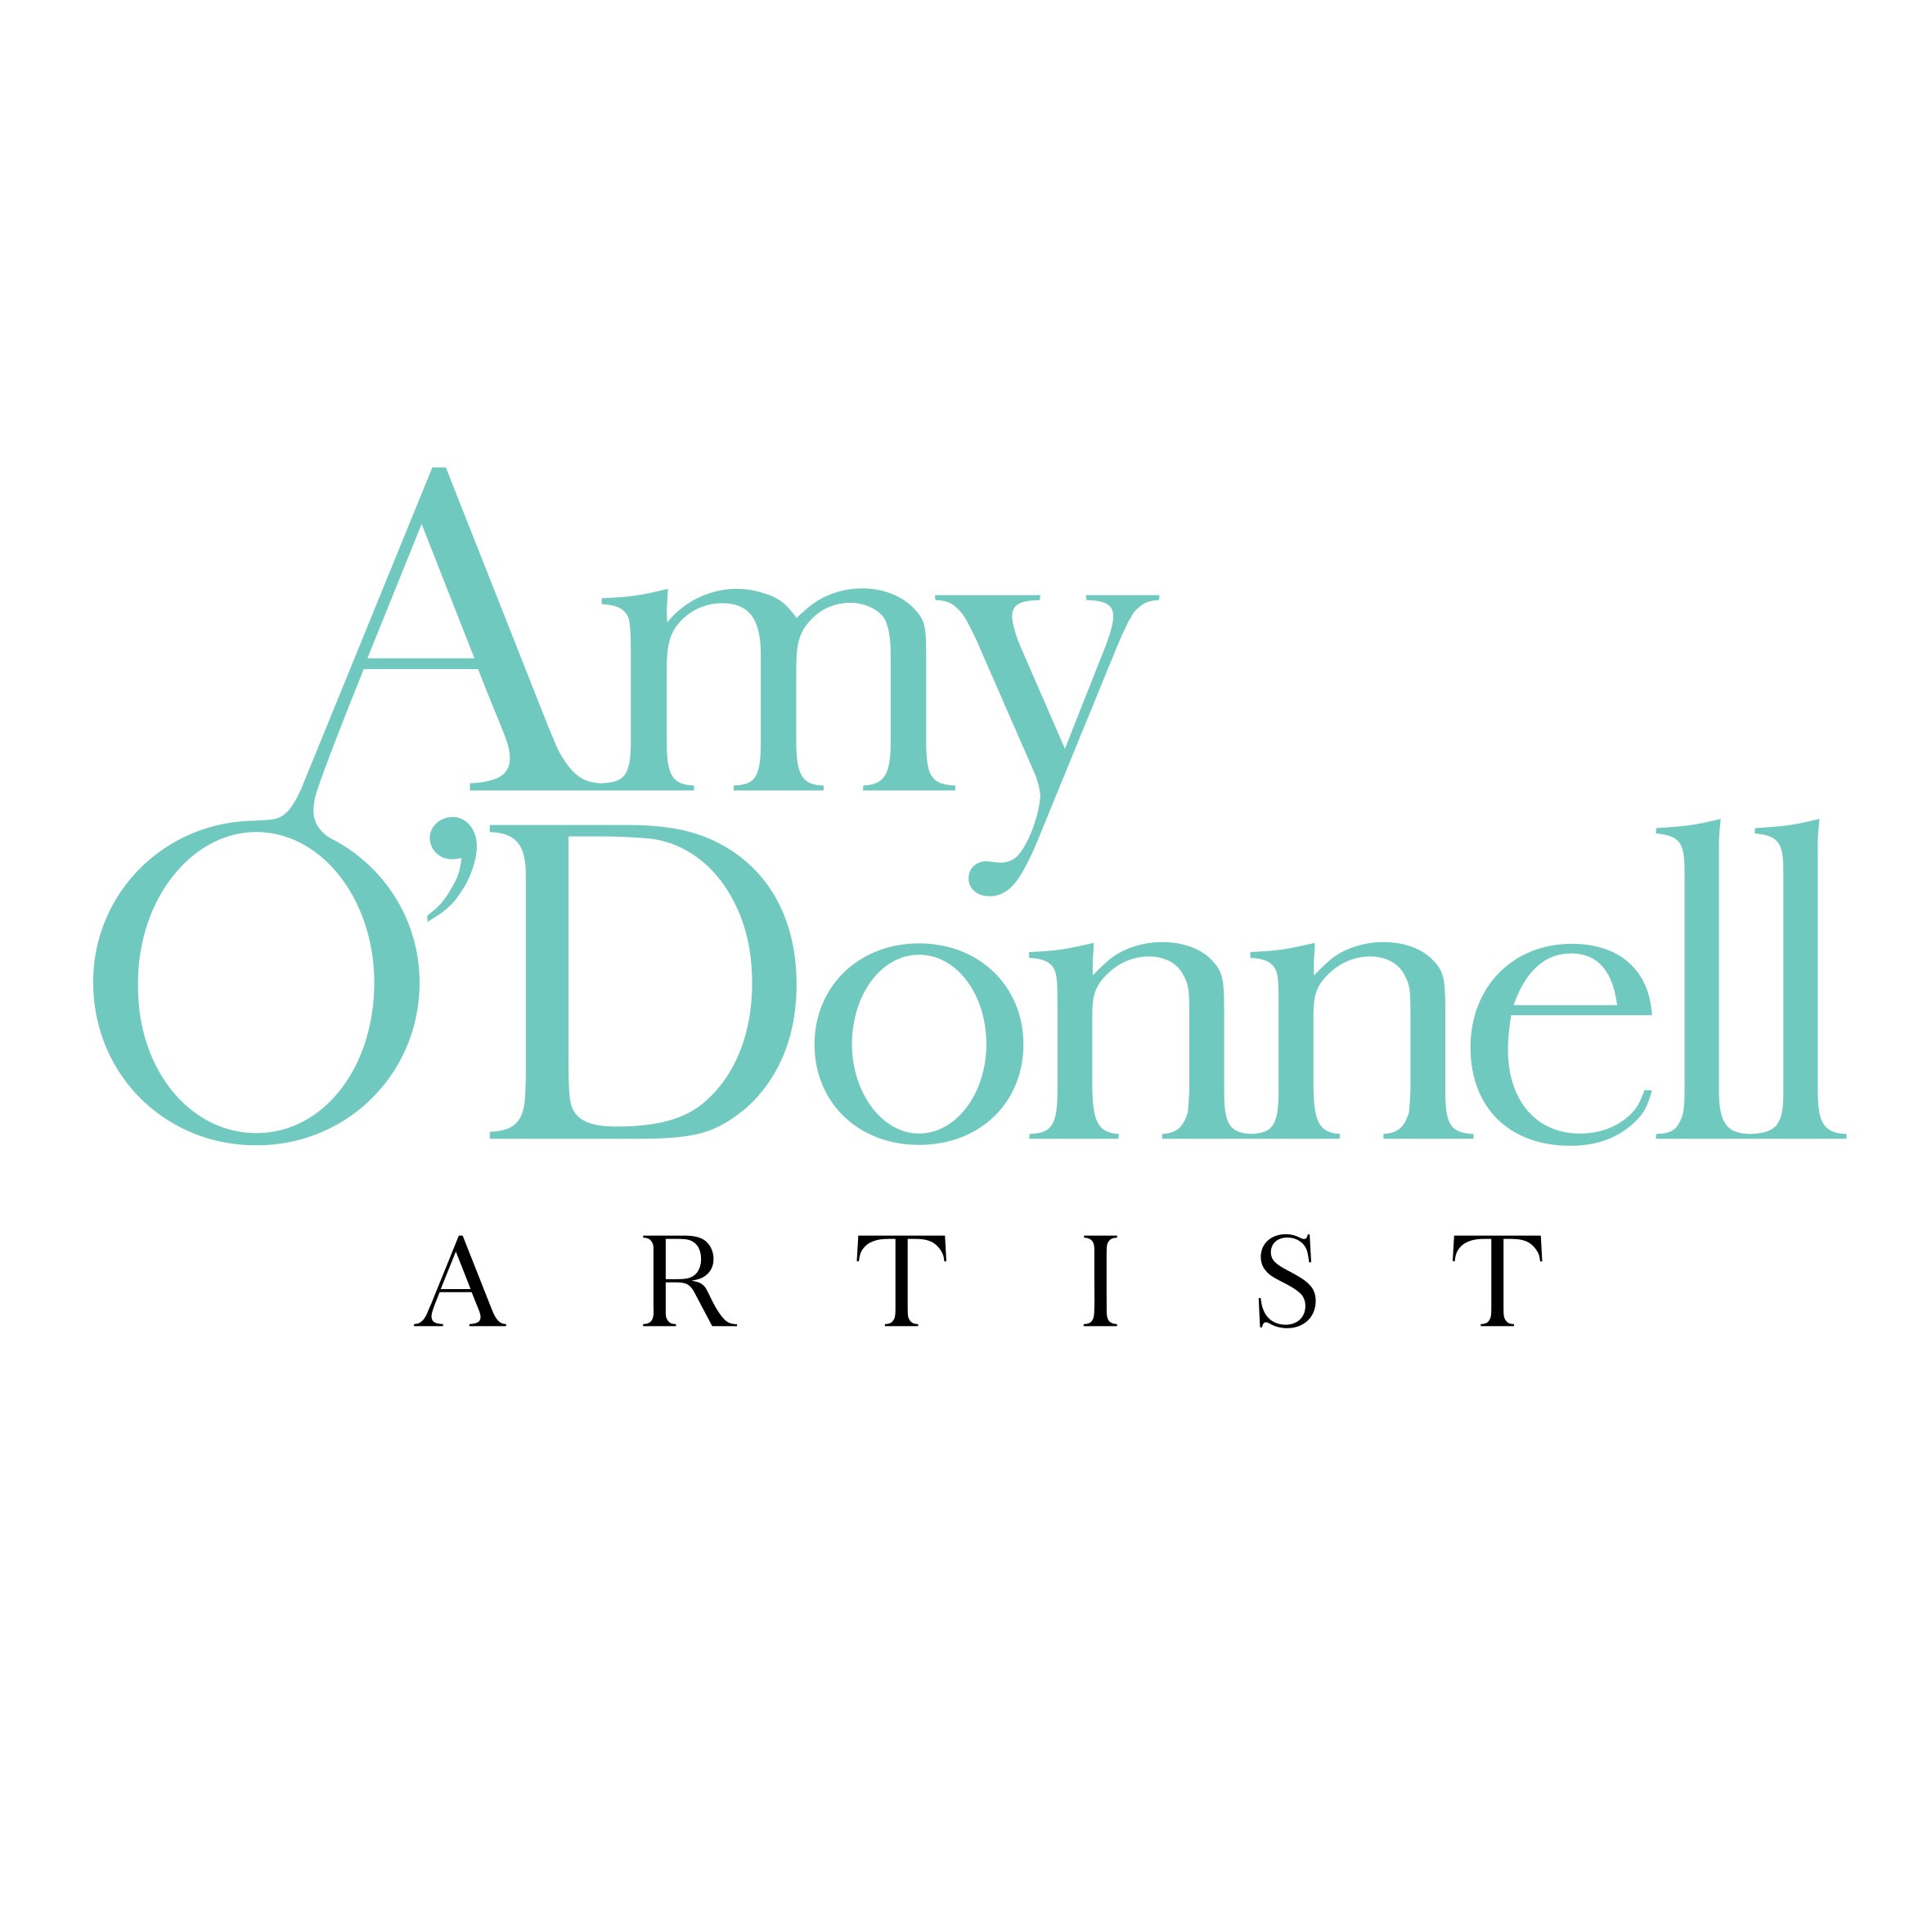 Australian, Typography, Object, Ocean, Plant Life, Landscape, Amy O'Donnell Canvas Art Prints